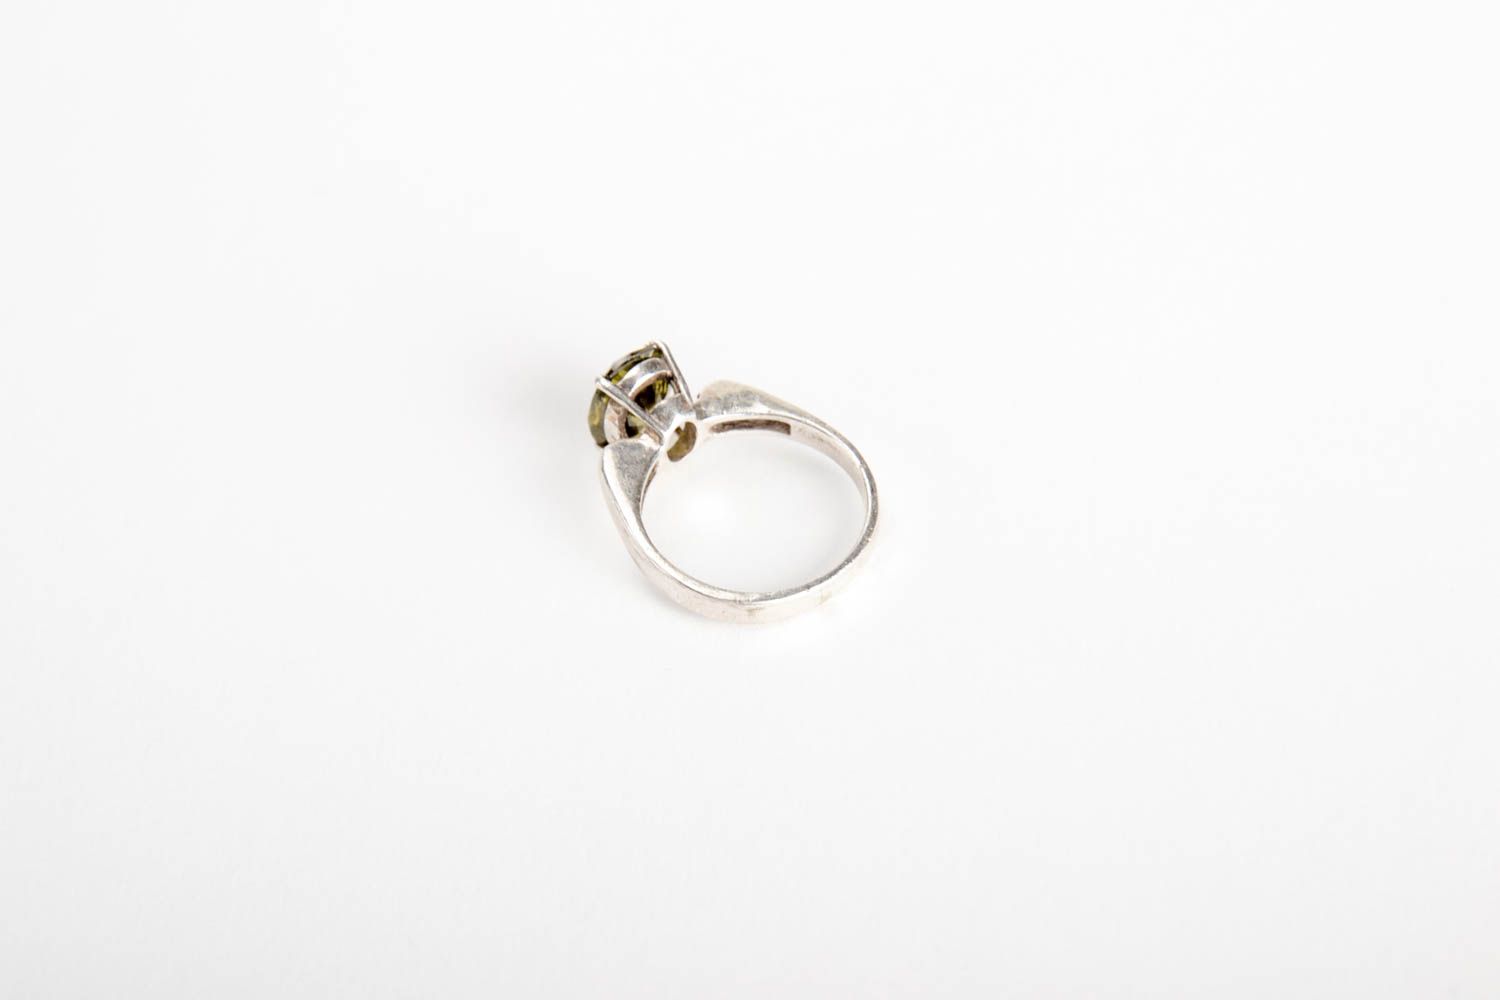 Stylish handmade silver ring designs beautiful jewellery handmade accessories photo 4